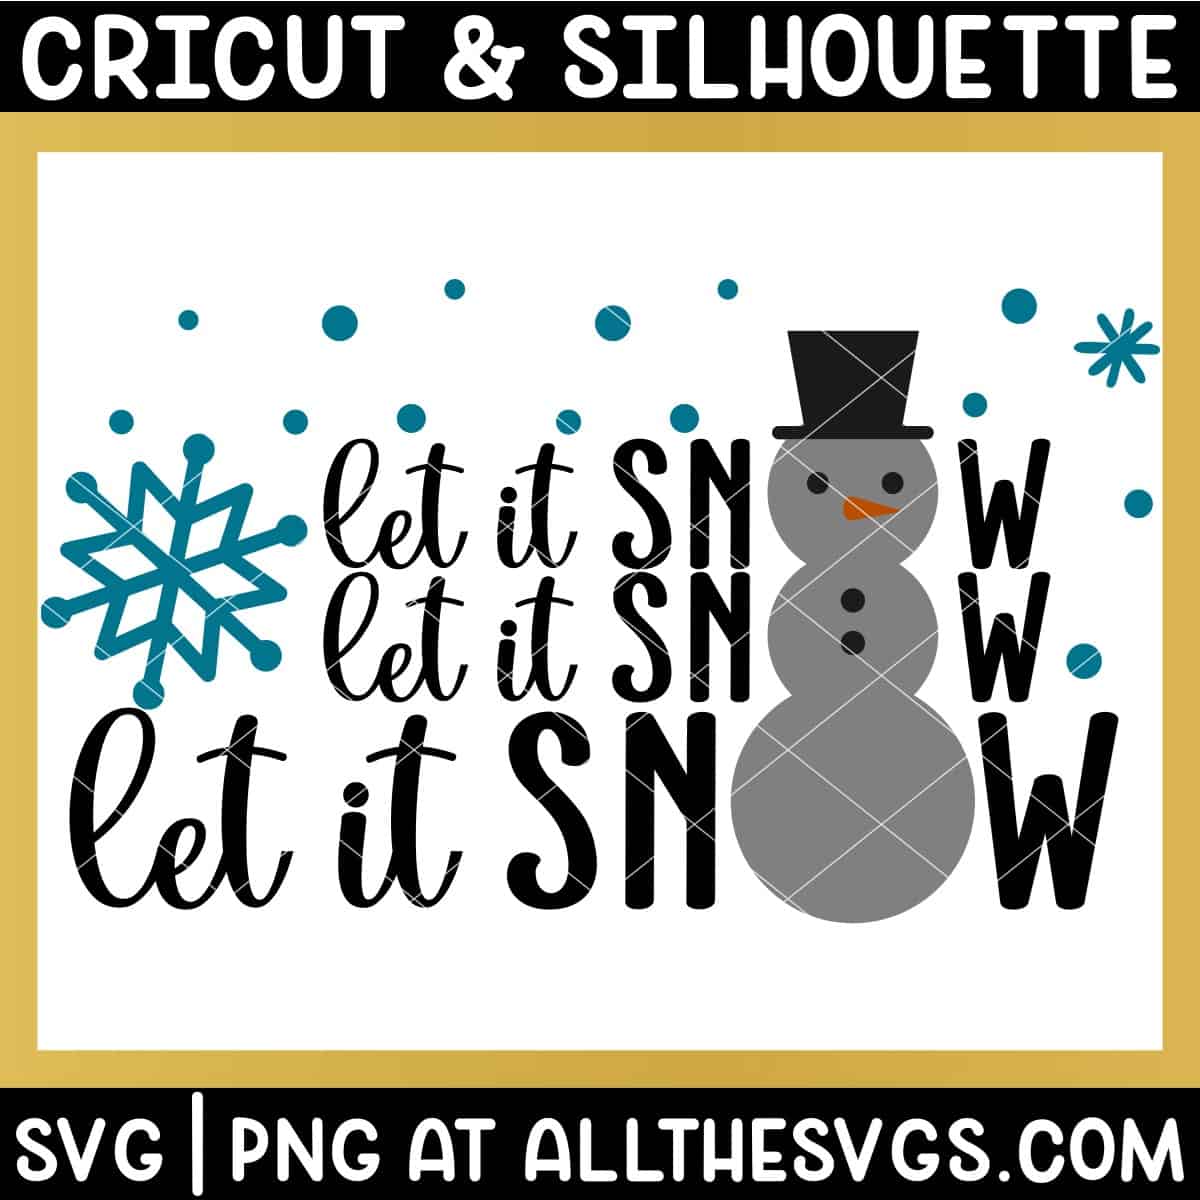 let it snow, let it snow, let it snow svg file with snowman.